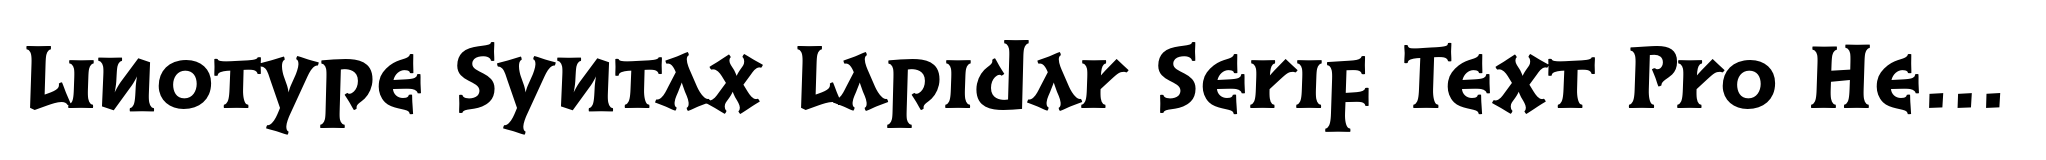 Linotype Syntax Lapidar Serif Text Pro Heavy image